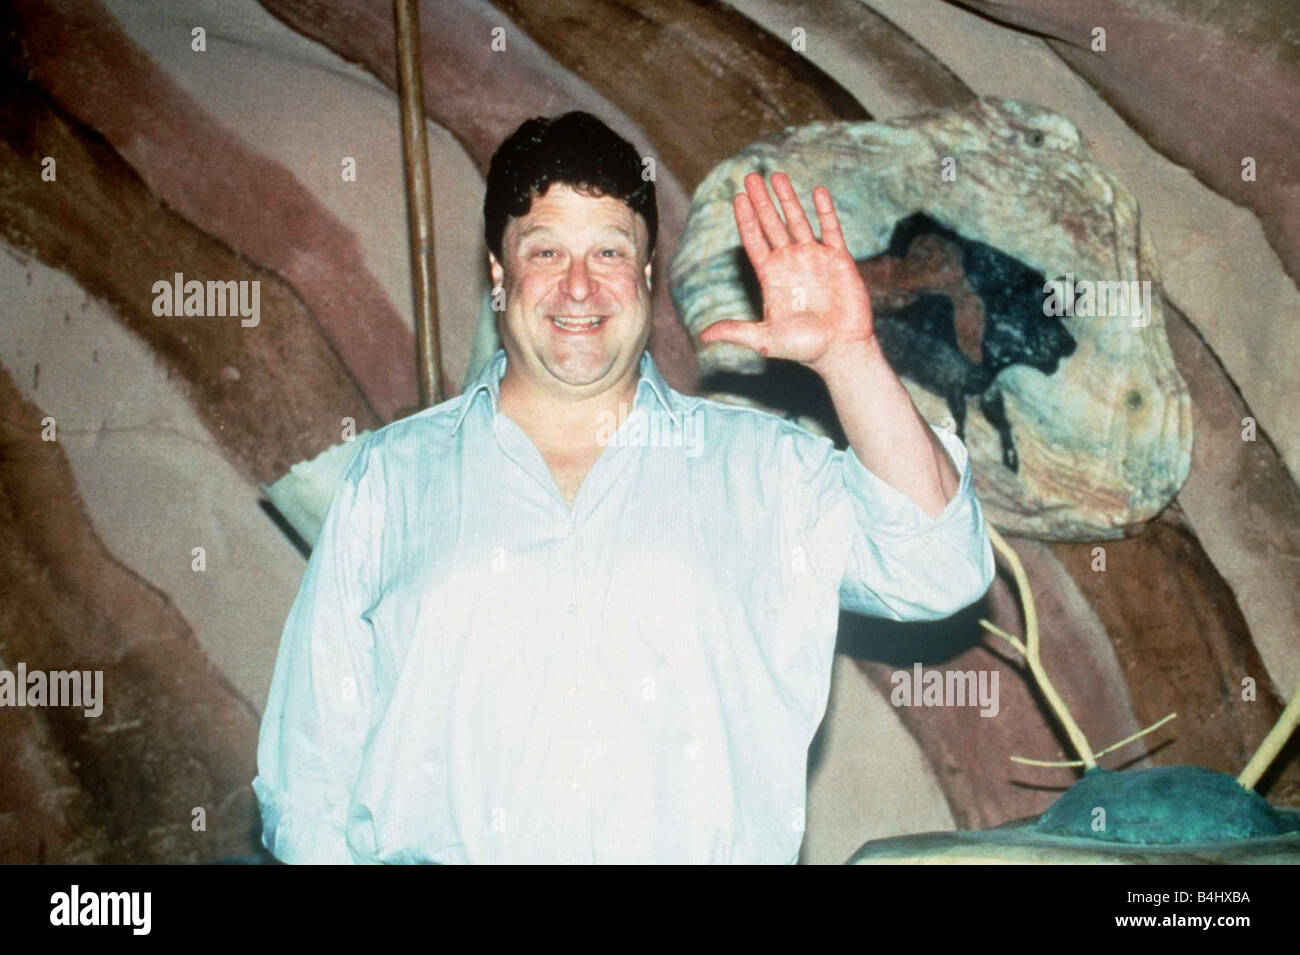 John Goodman actor on set of film The Flinstones 1994 Stock Photo